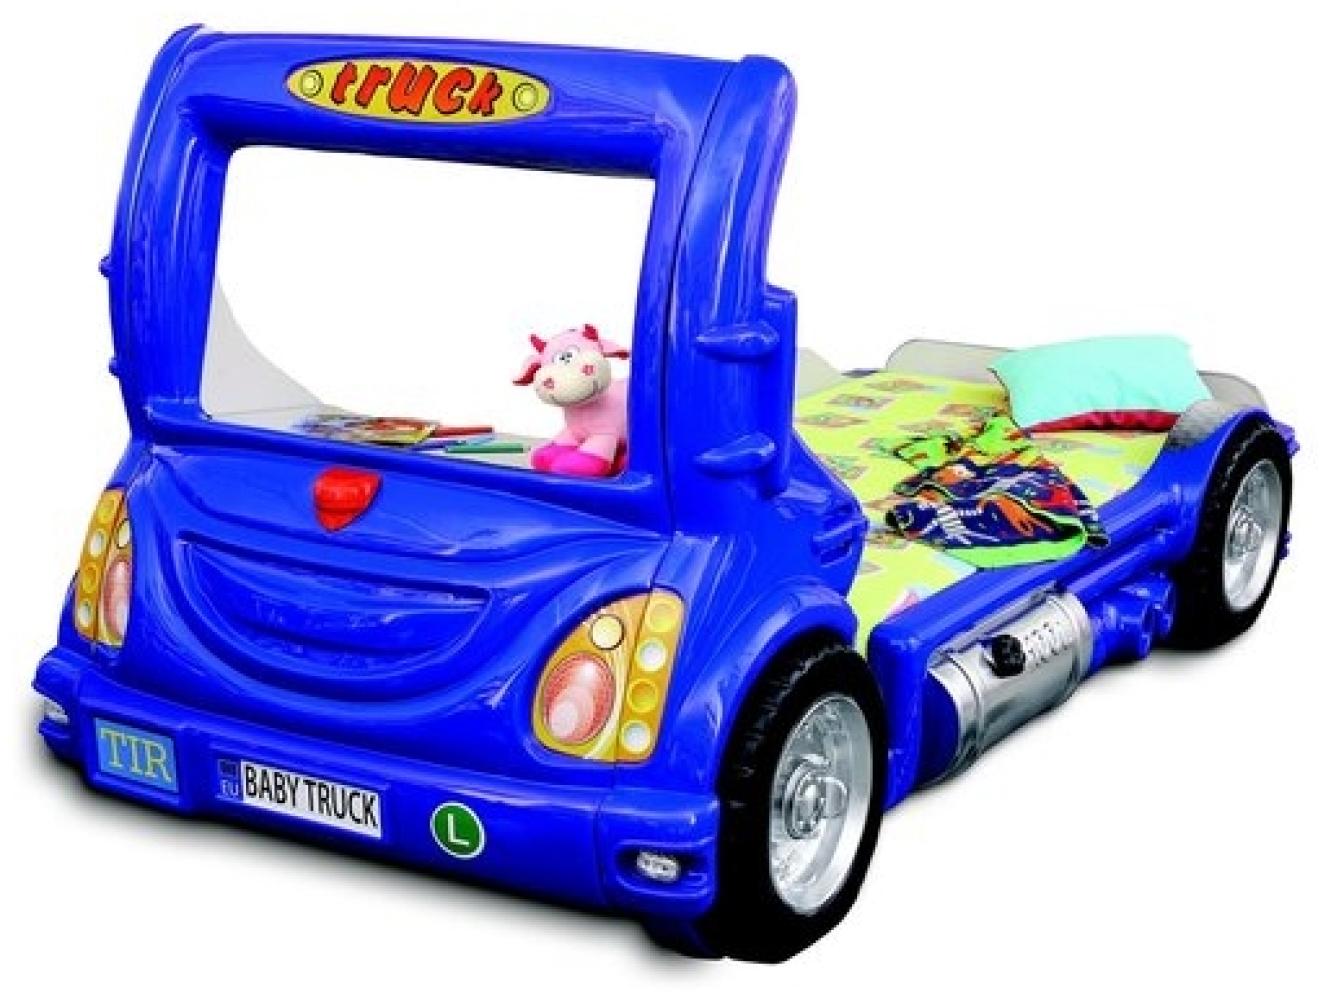 LKW Auto Truck Kinder Kinderbett Jugendbett Bett Betten Kindermöbel Neu Bild 1